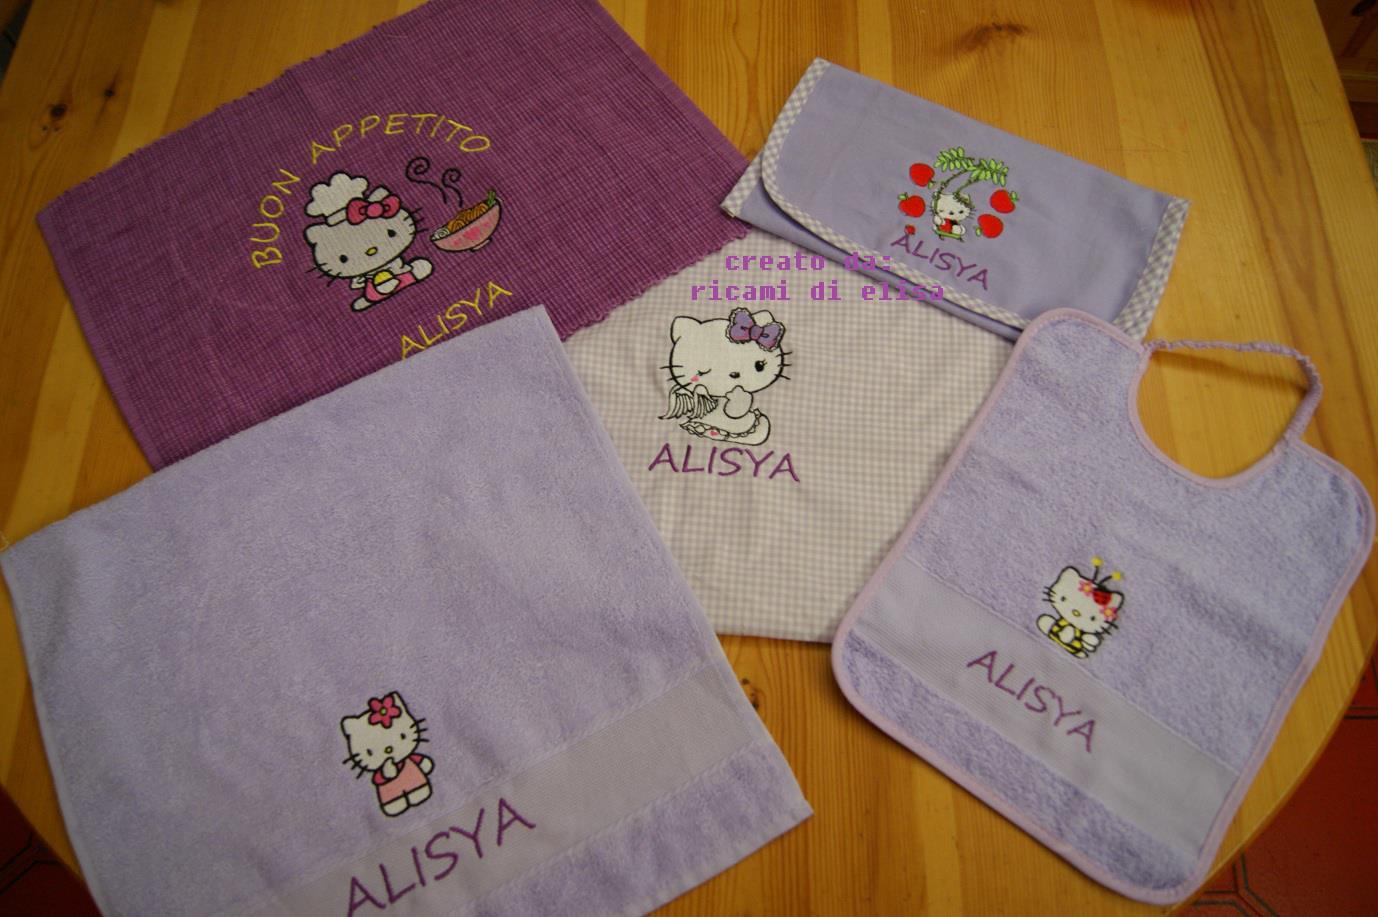 Hello Kitty embroidery design